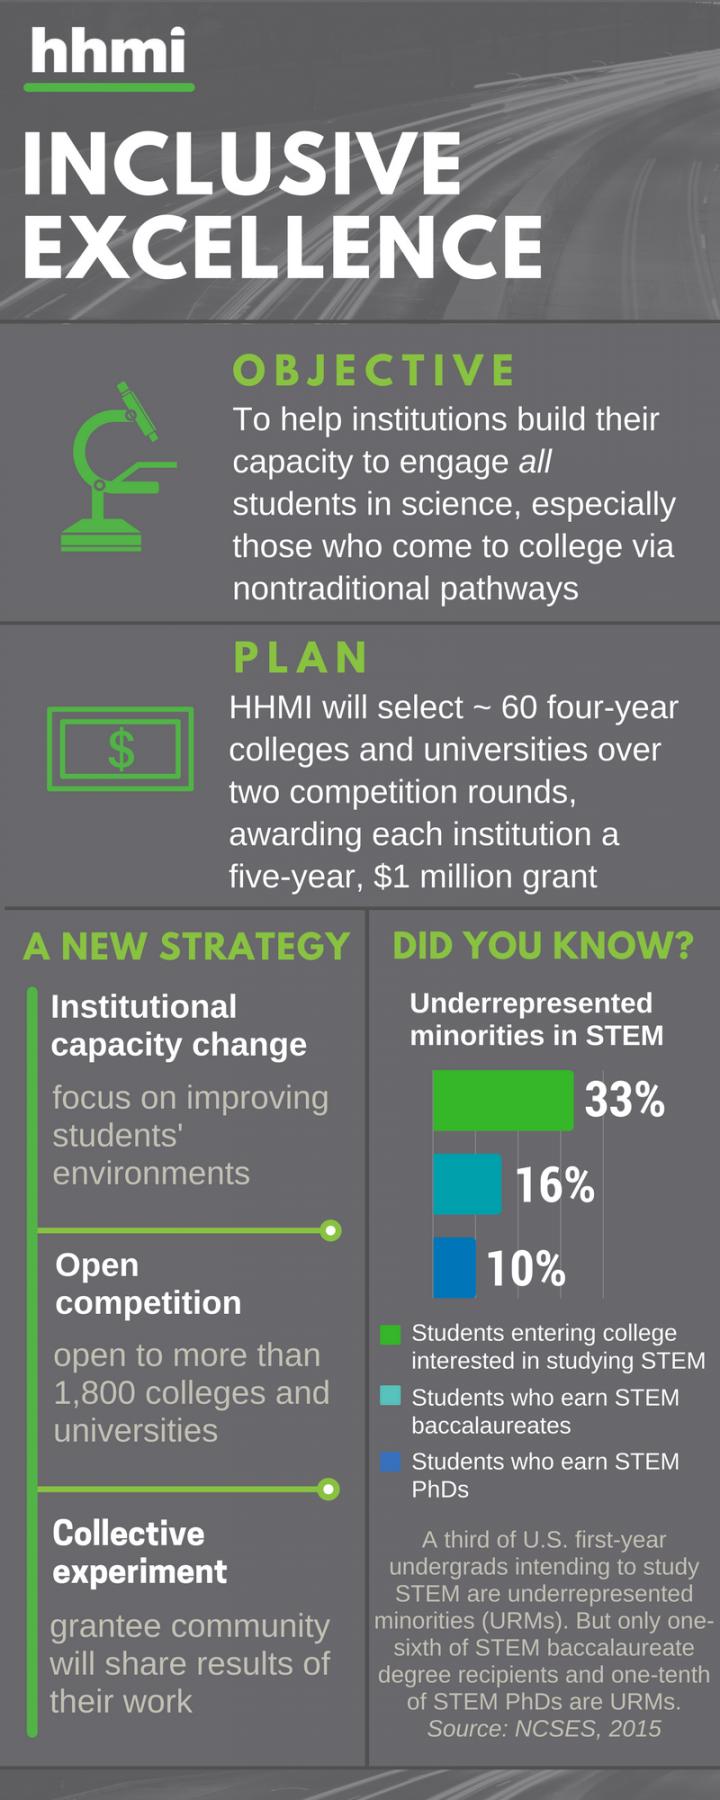 HHMI's Inclusive Excellence initiative